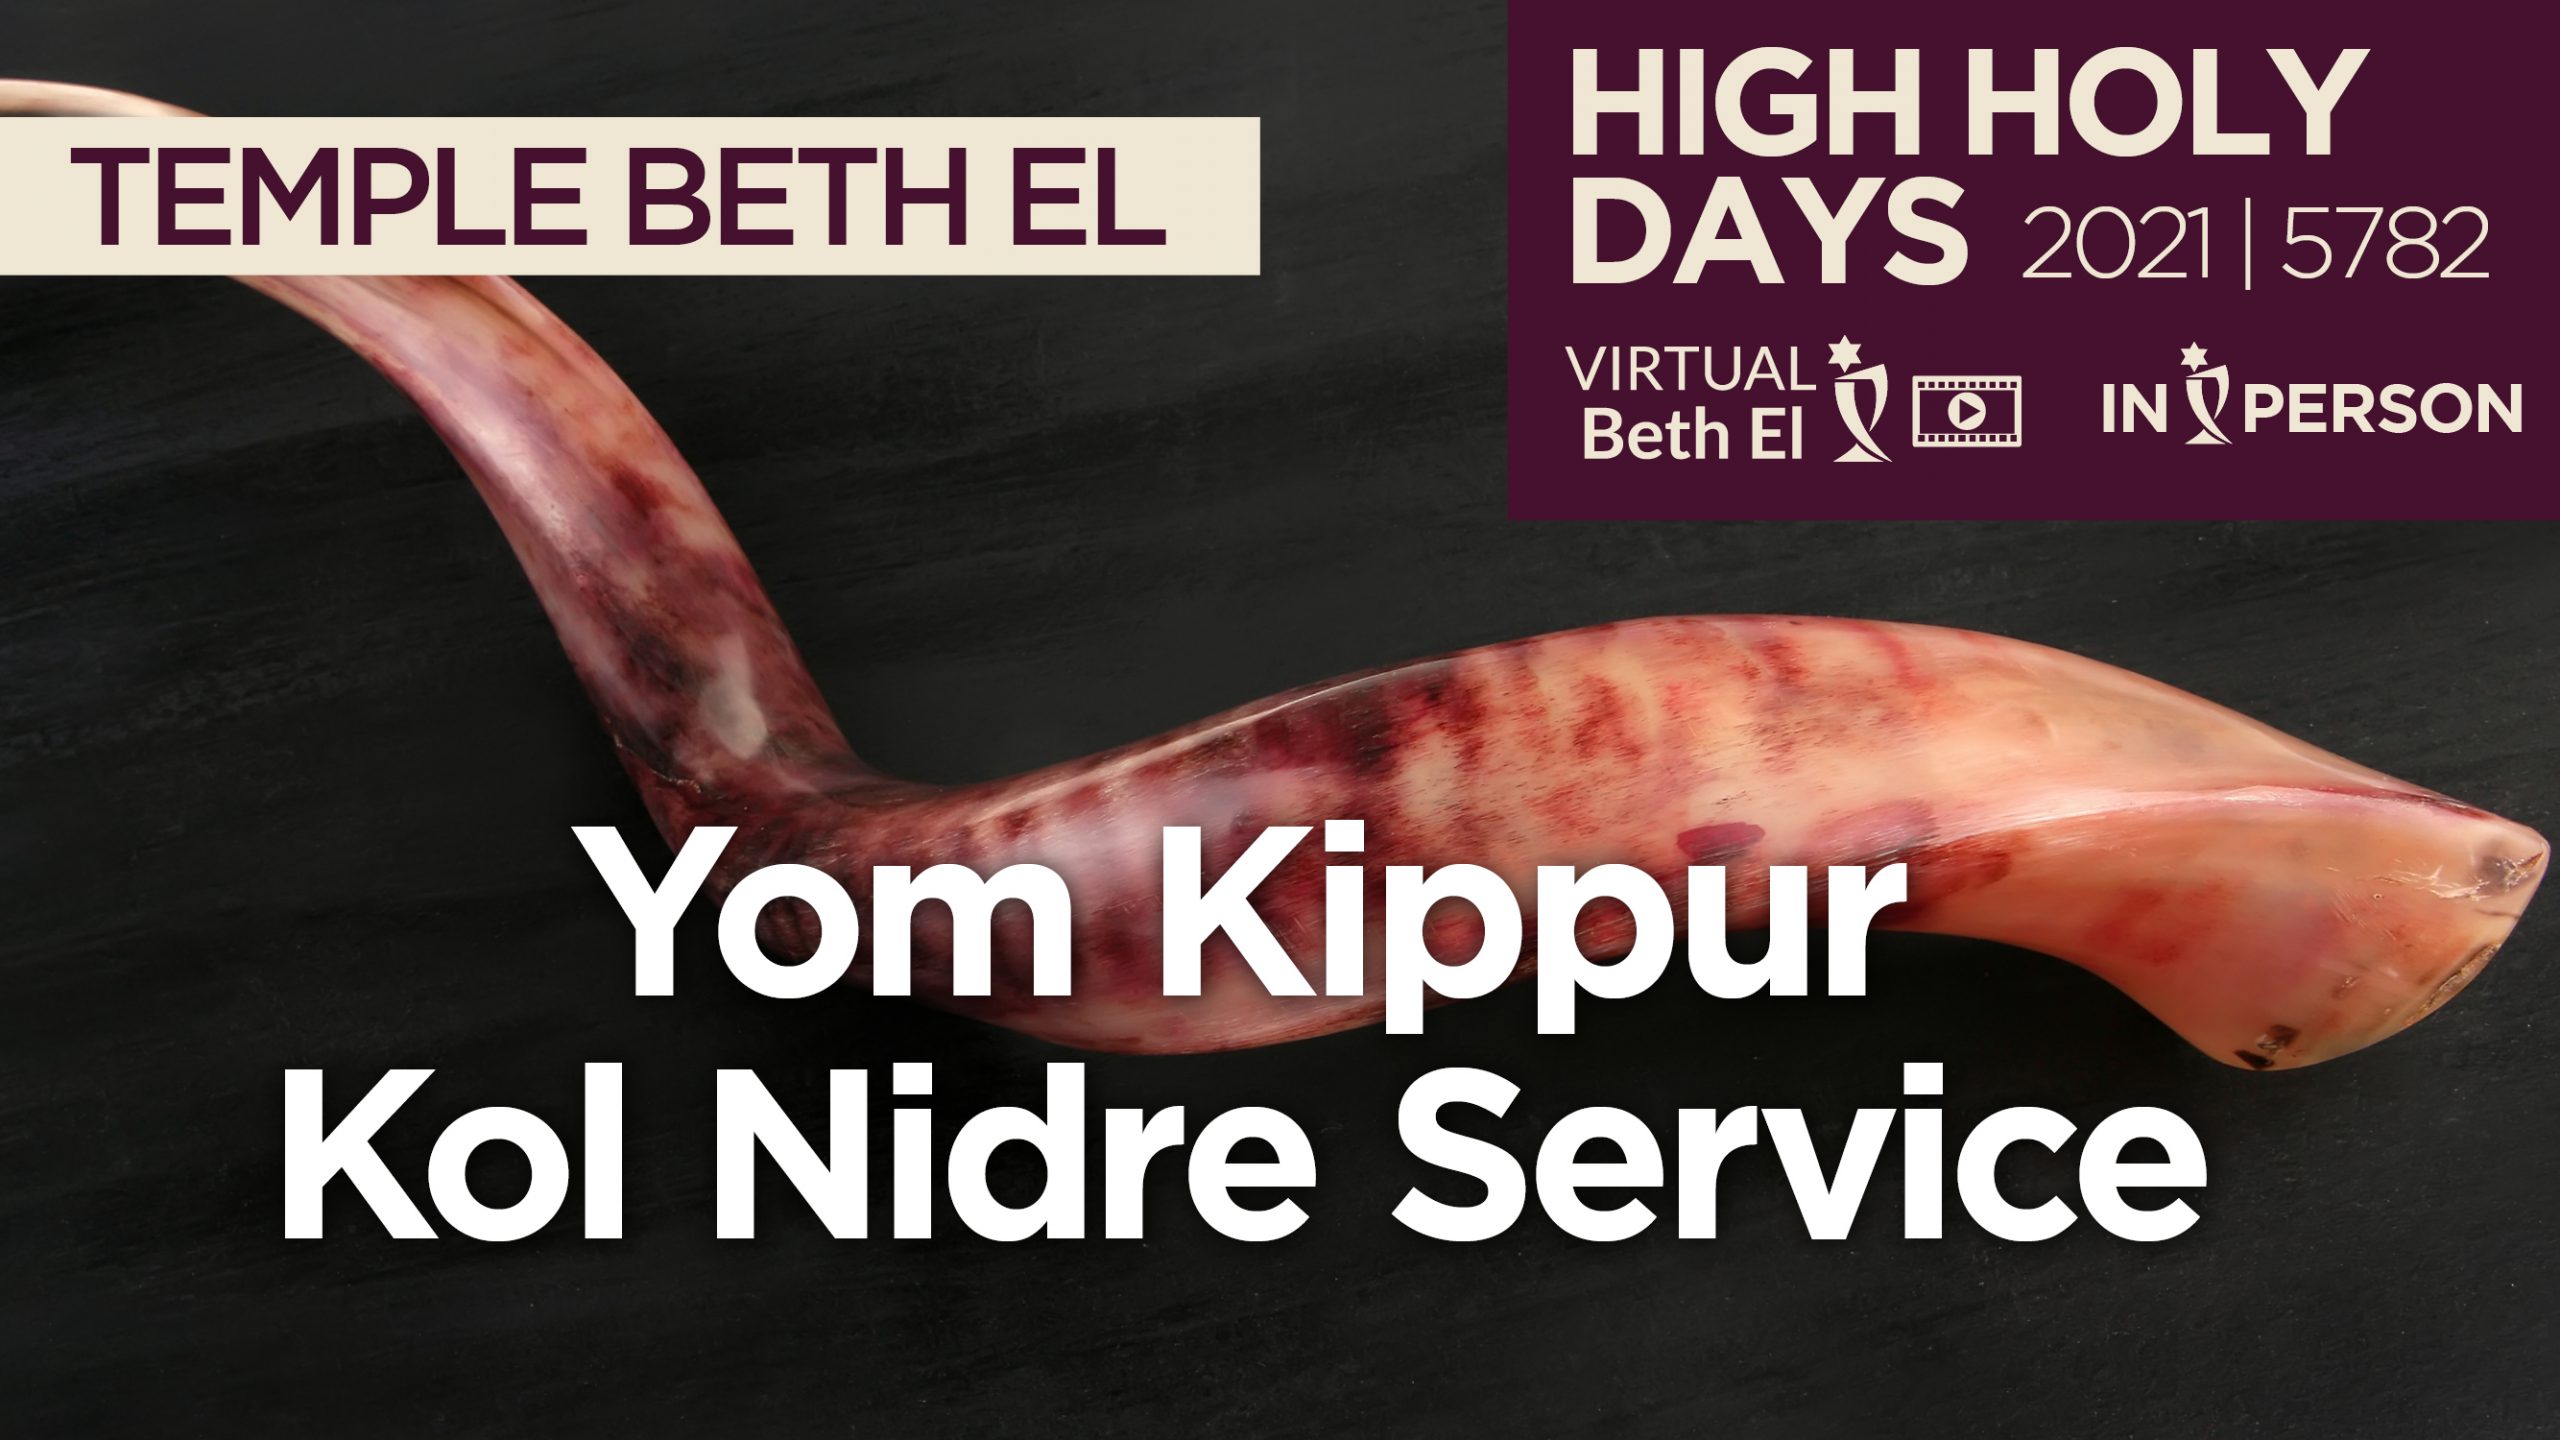 Yom Kippur Kol Nidre Services Announcement Graphic for 2021 5782